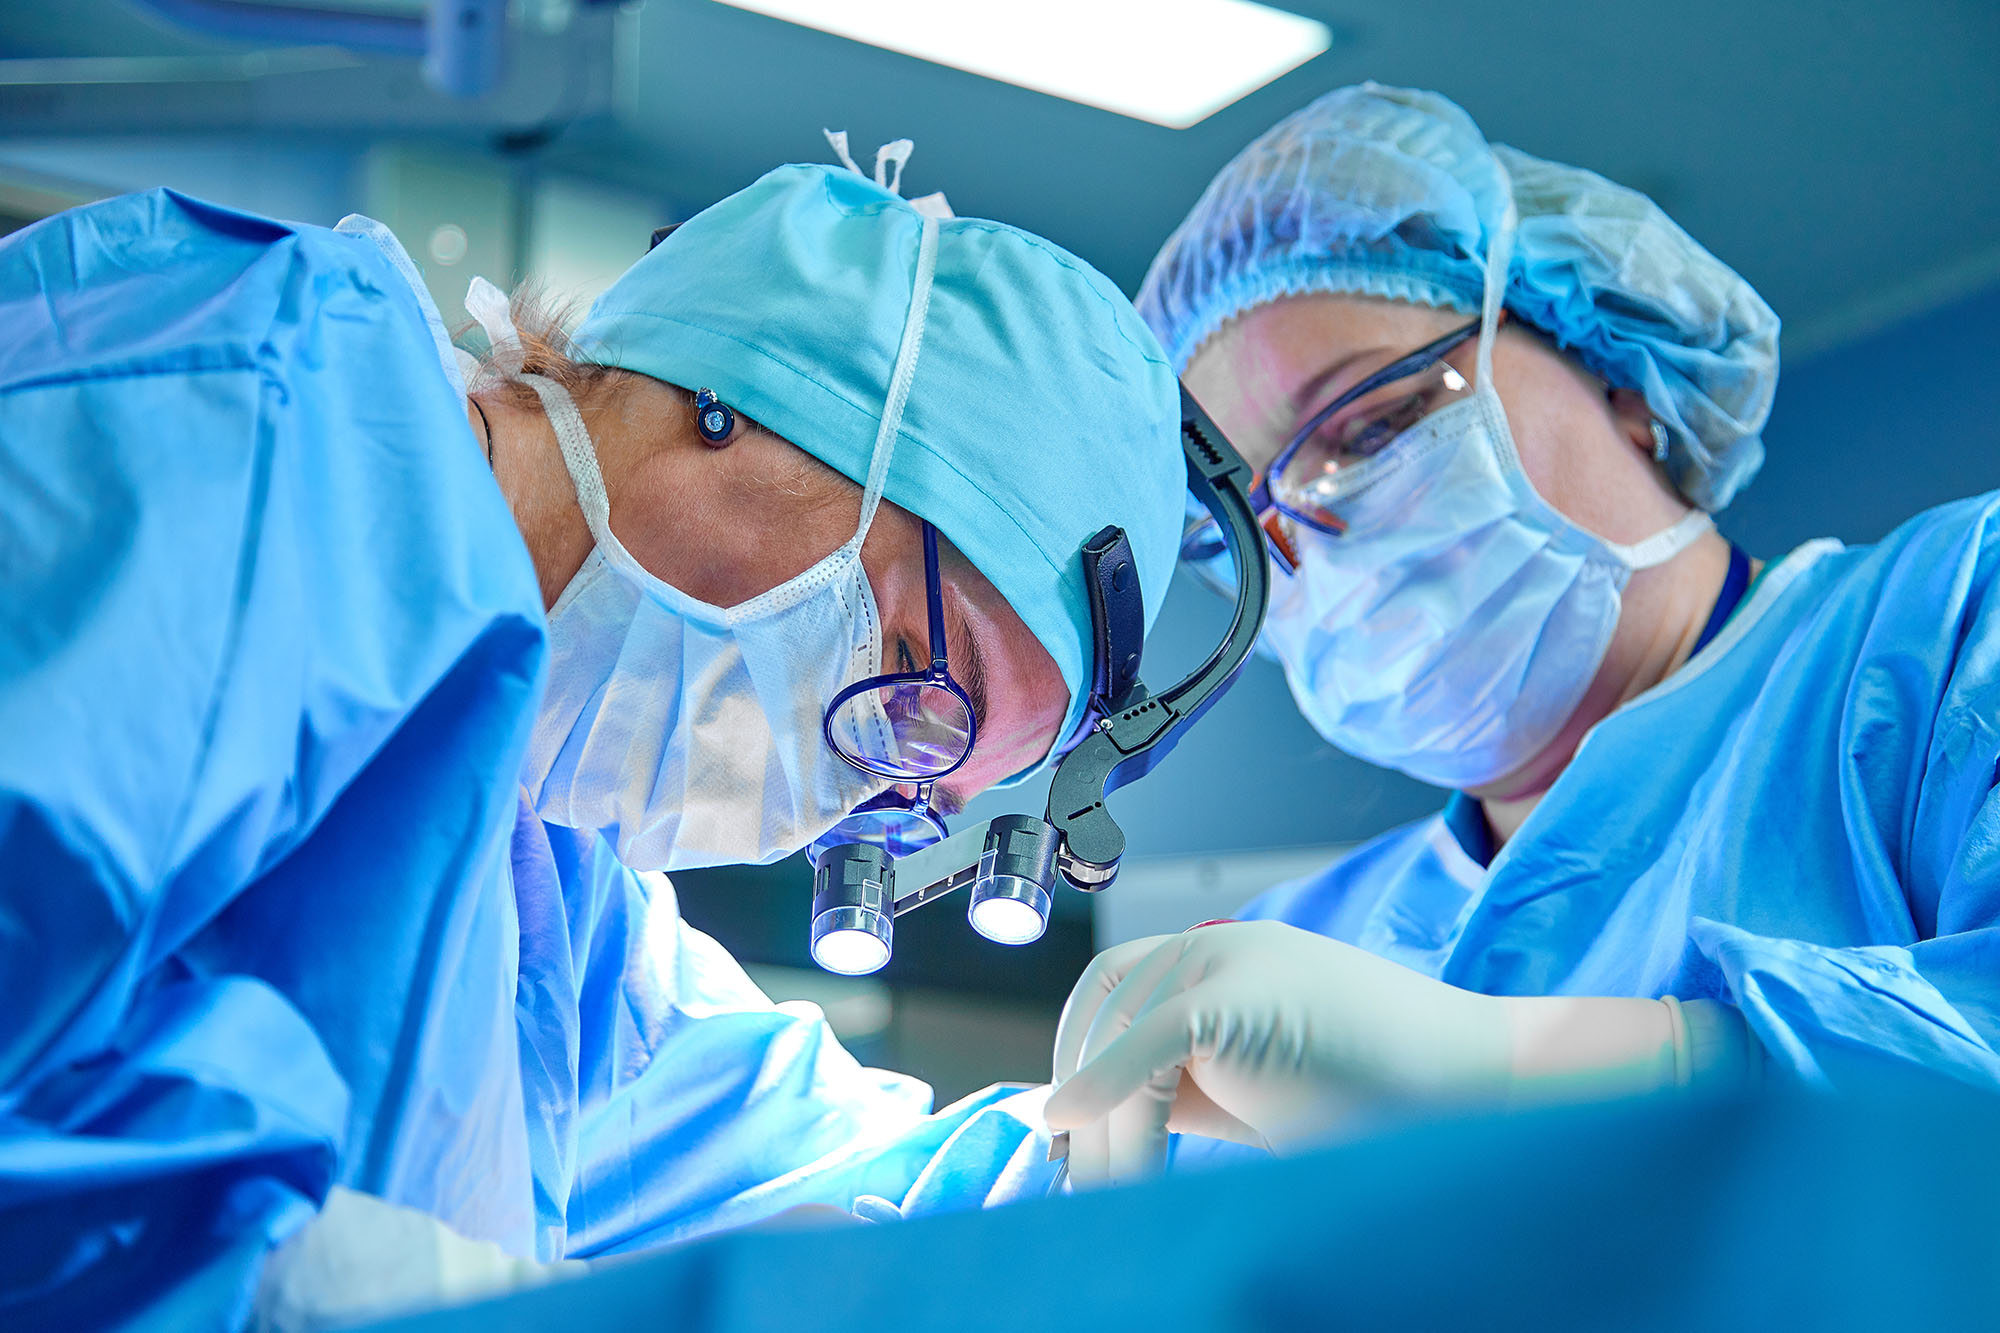 neglegent surgery injury from operations medical negligence solicitors Bristol